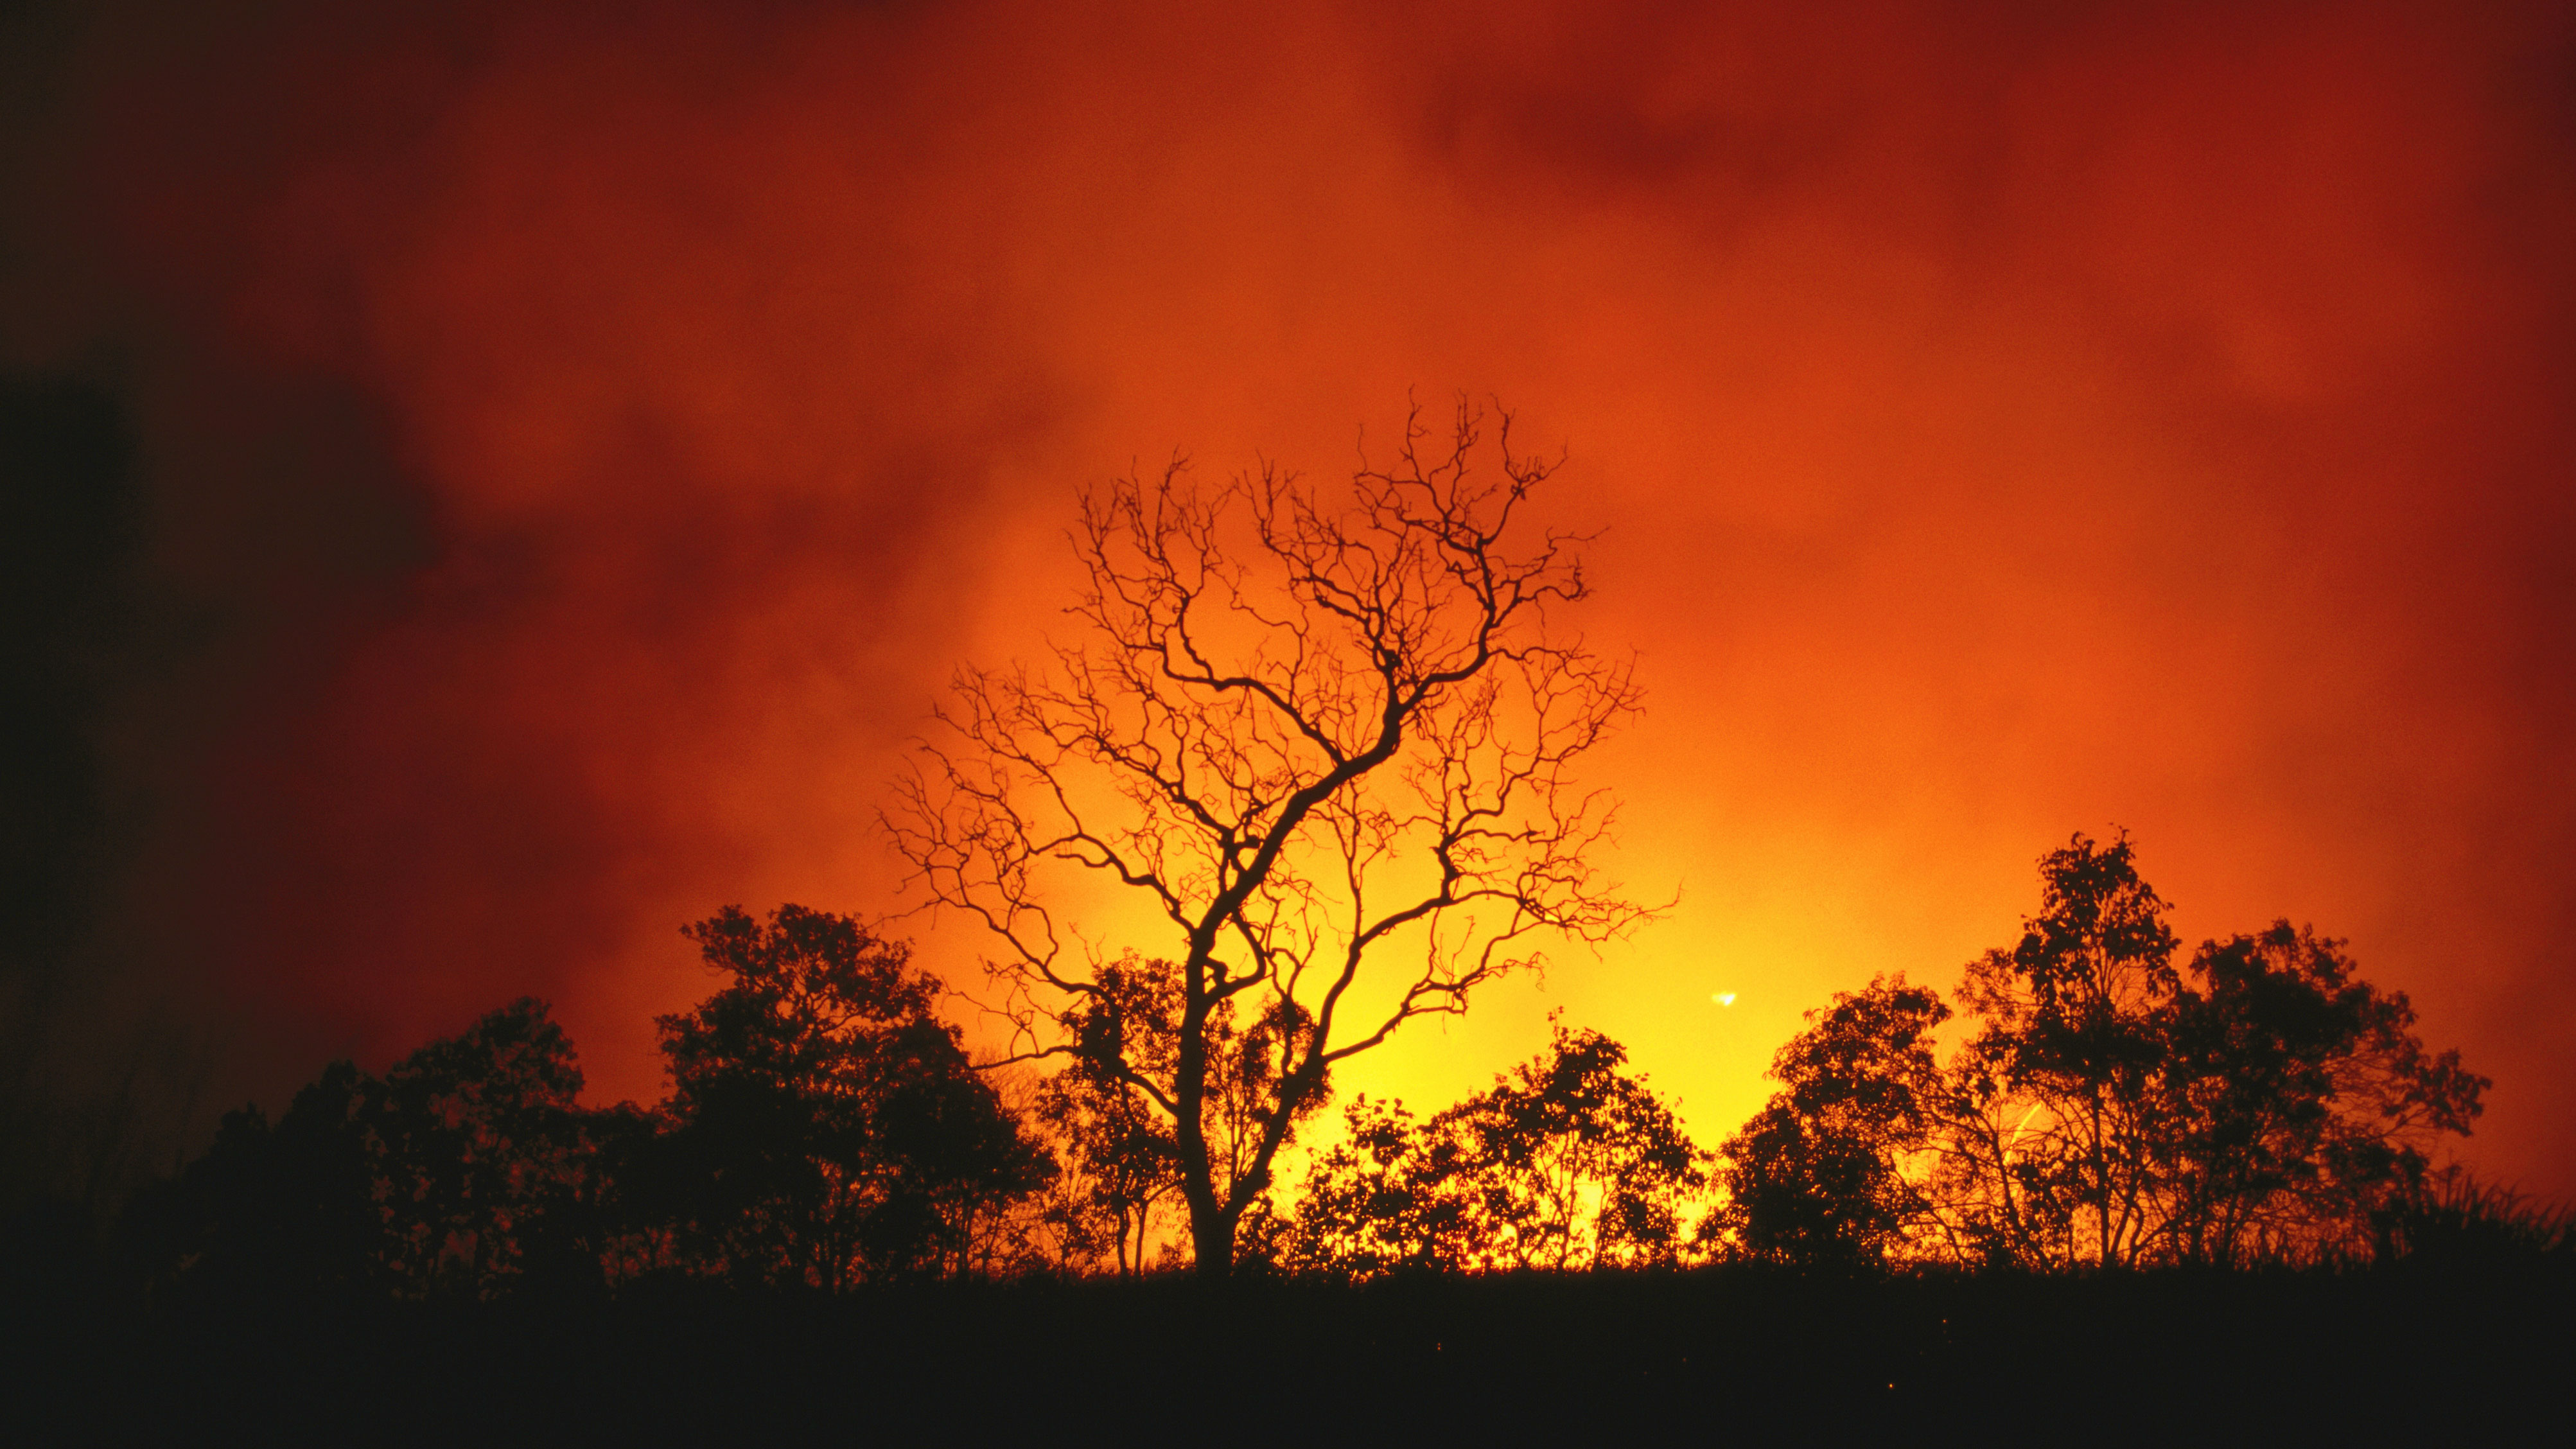 Bushfire in Queensland, Australia